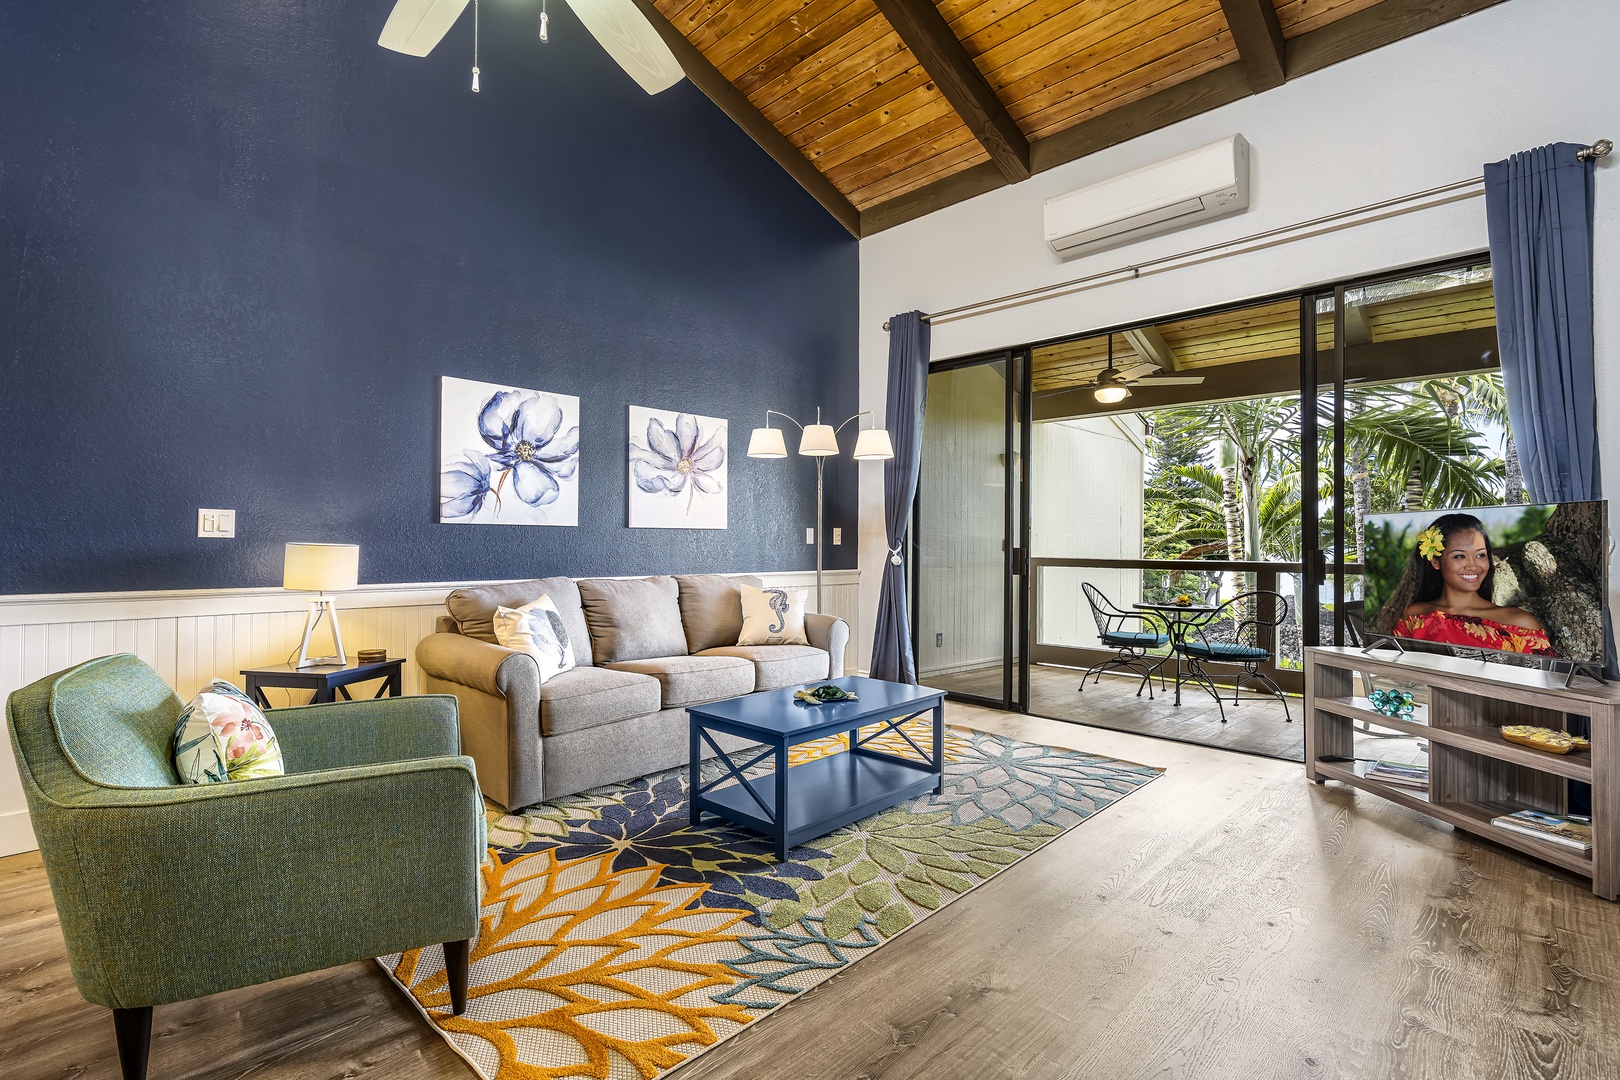 Kailua Kona Vacation Rentals, Keauhou Kona Surf & Racquet 9303 - Spacious, newly renovated living room with split system A/C